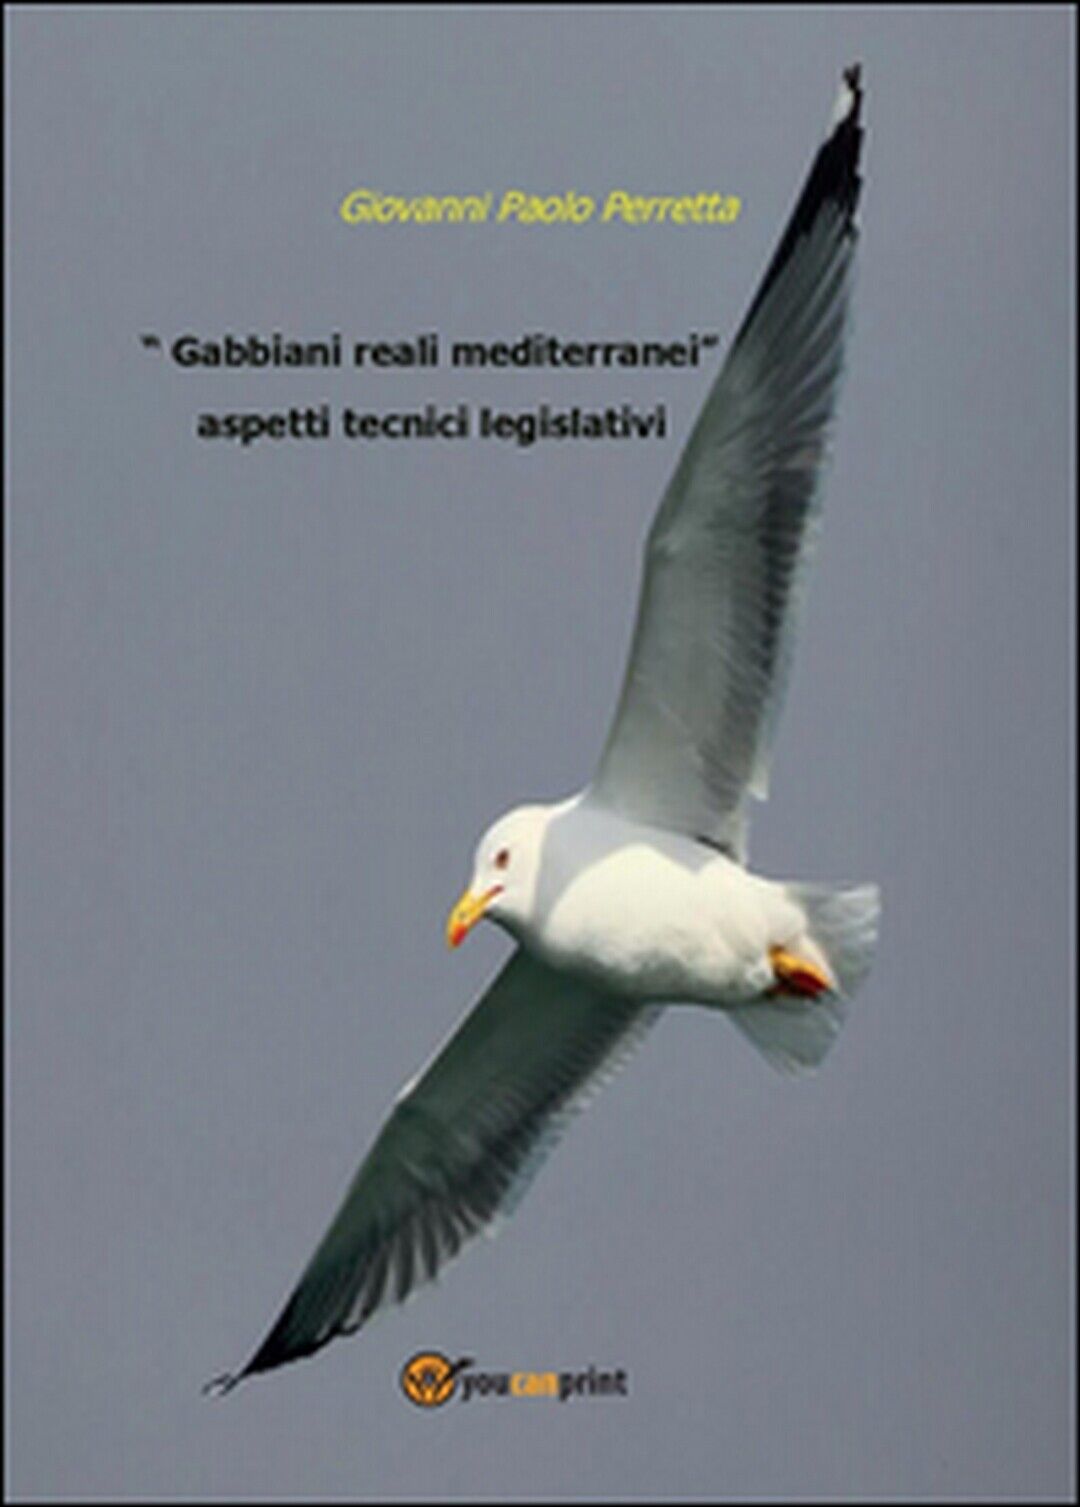 Gabbiani reali mediterranei aspetti tecnici legislativi. Golfo di Gaeta 